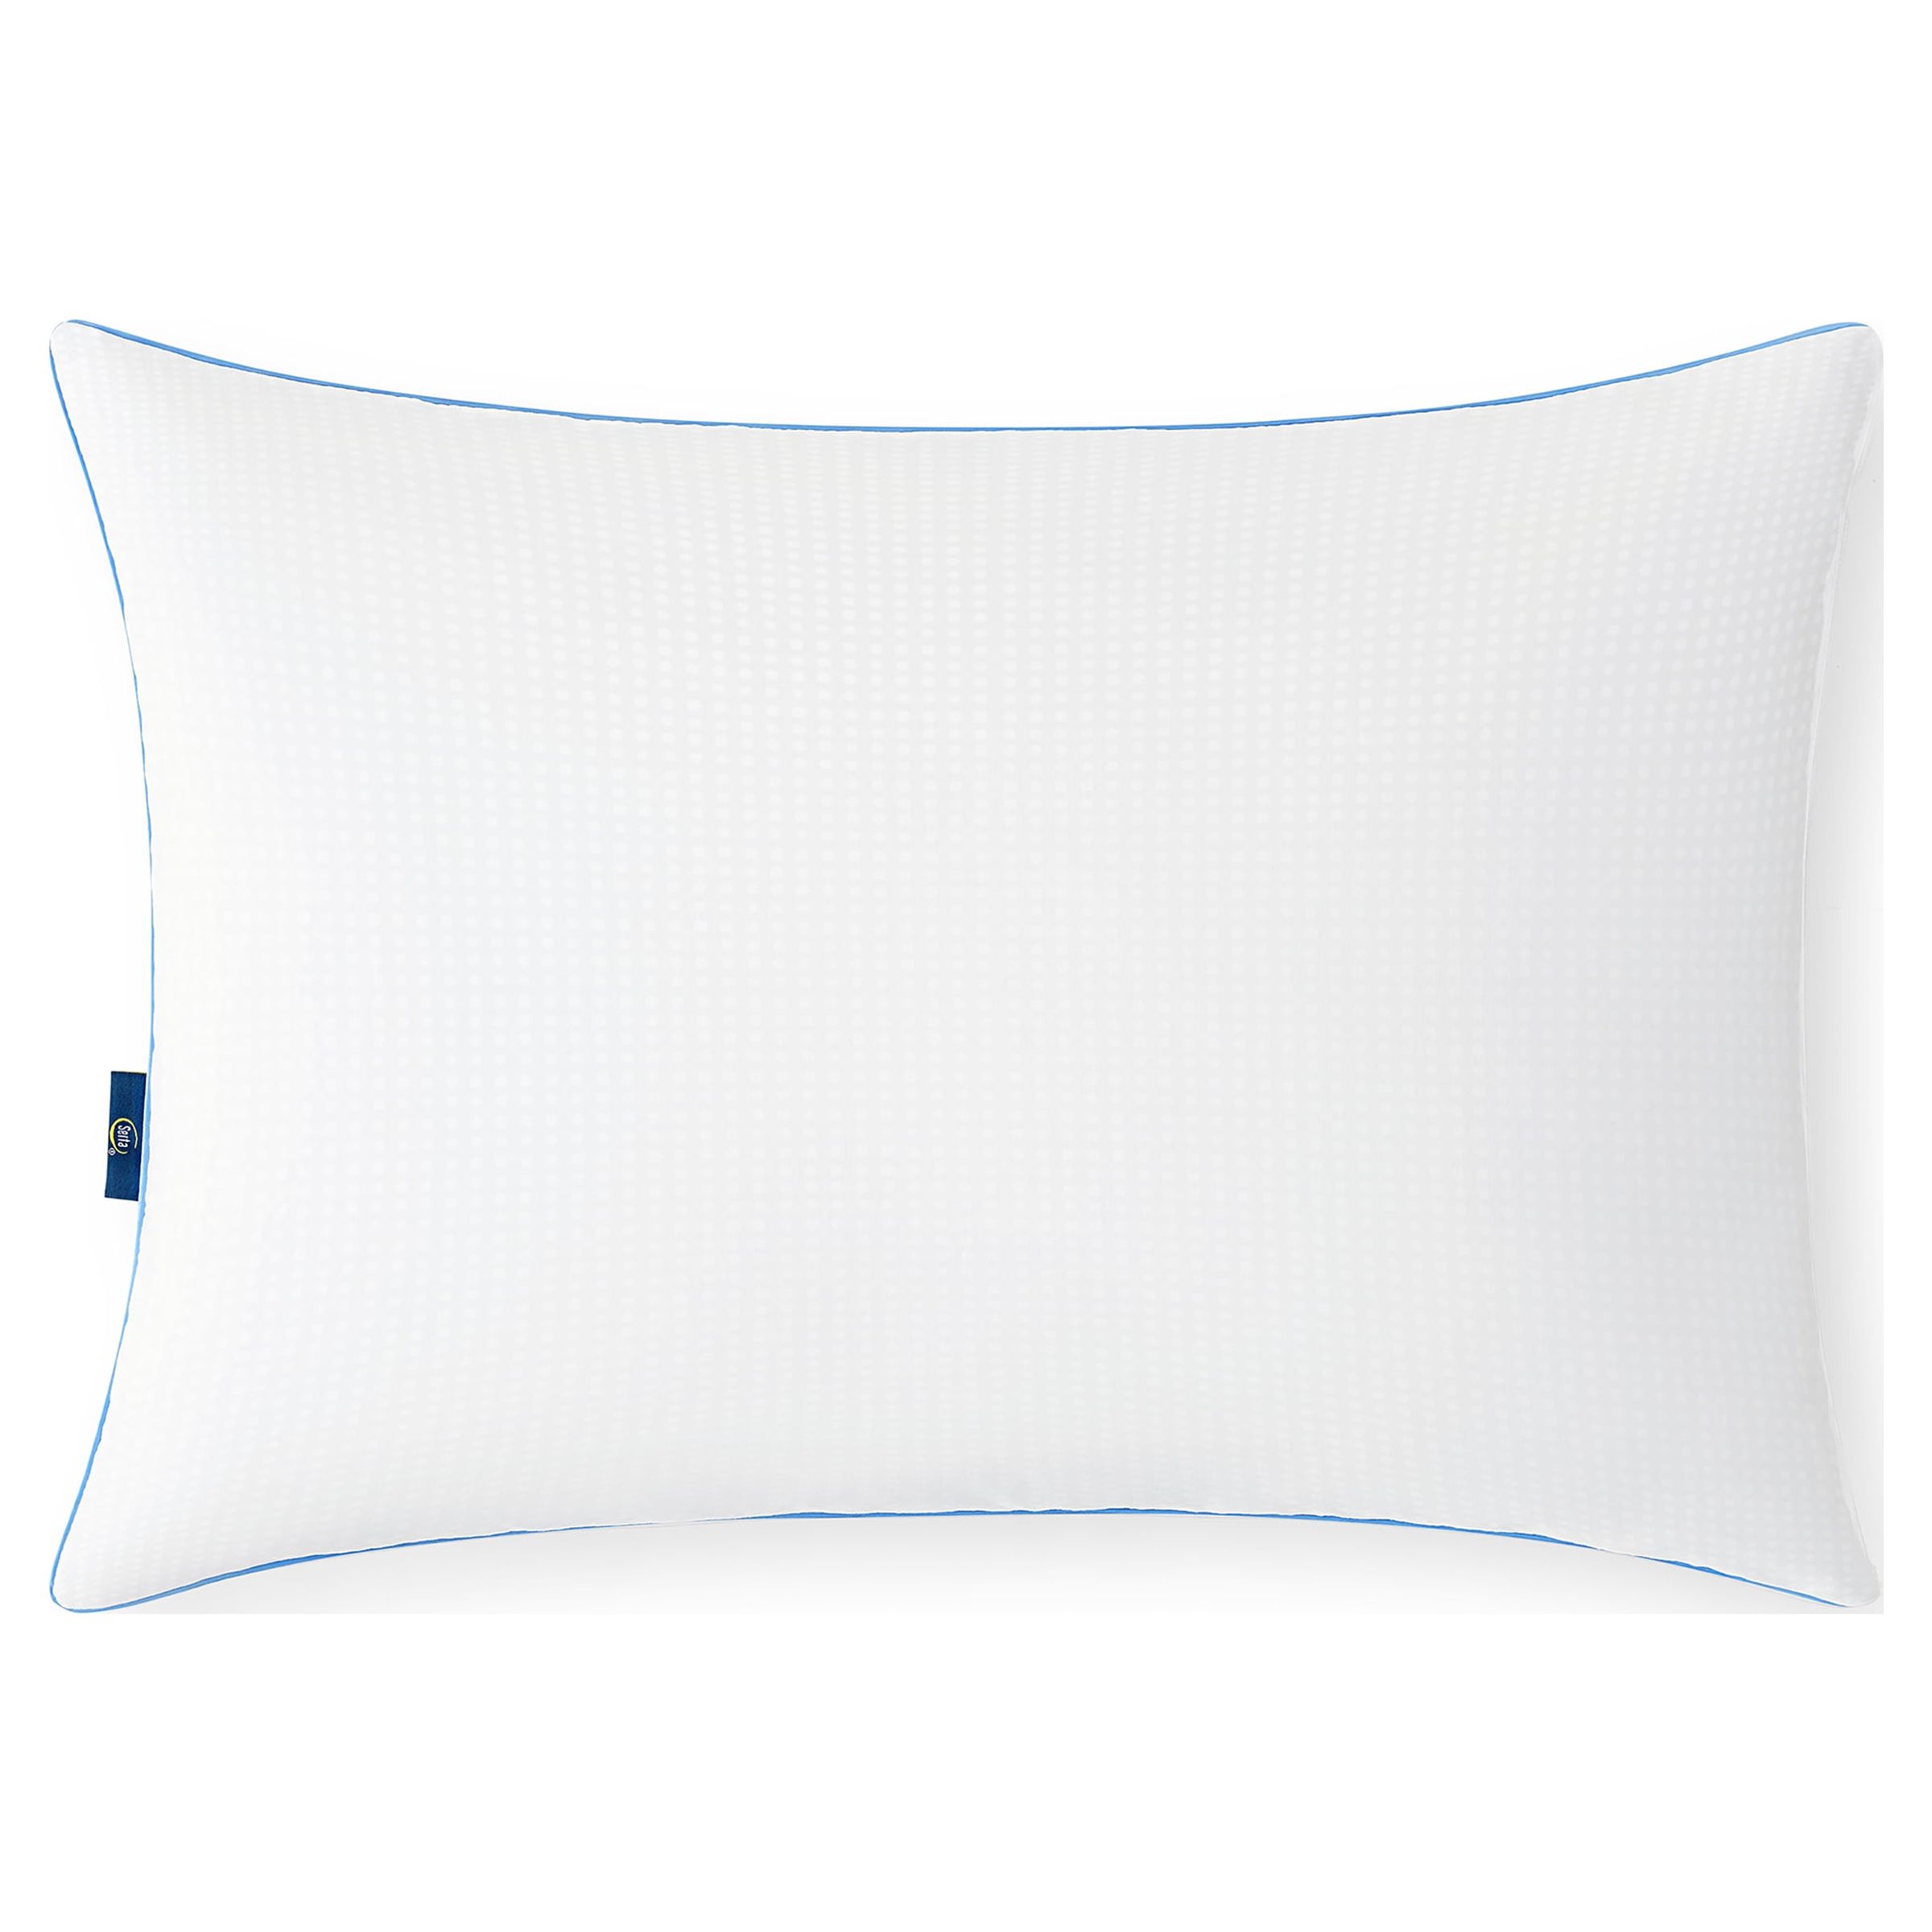 Sertapedic Cool Nites Bed Pillow, Standard/Queen - image 2 of 6